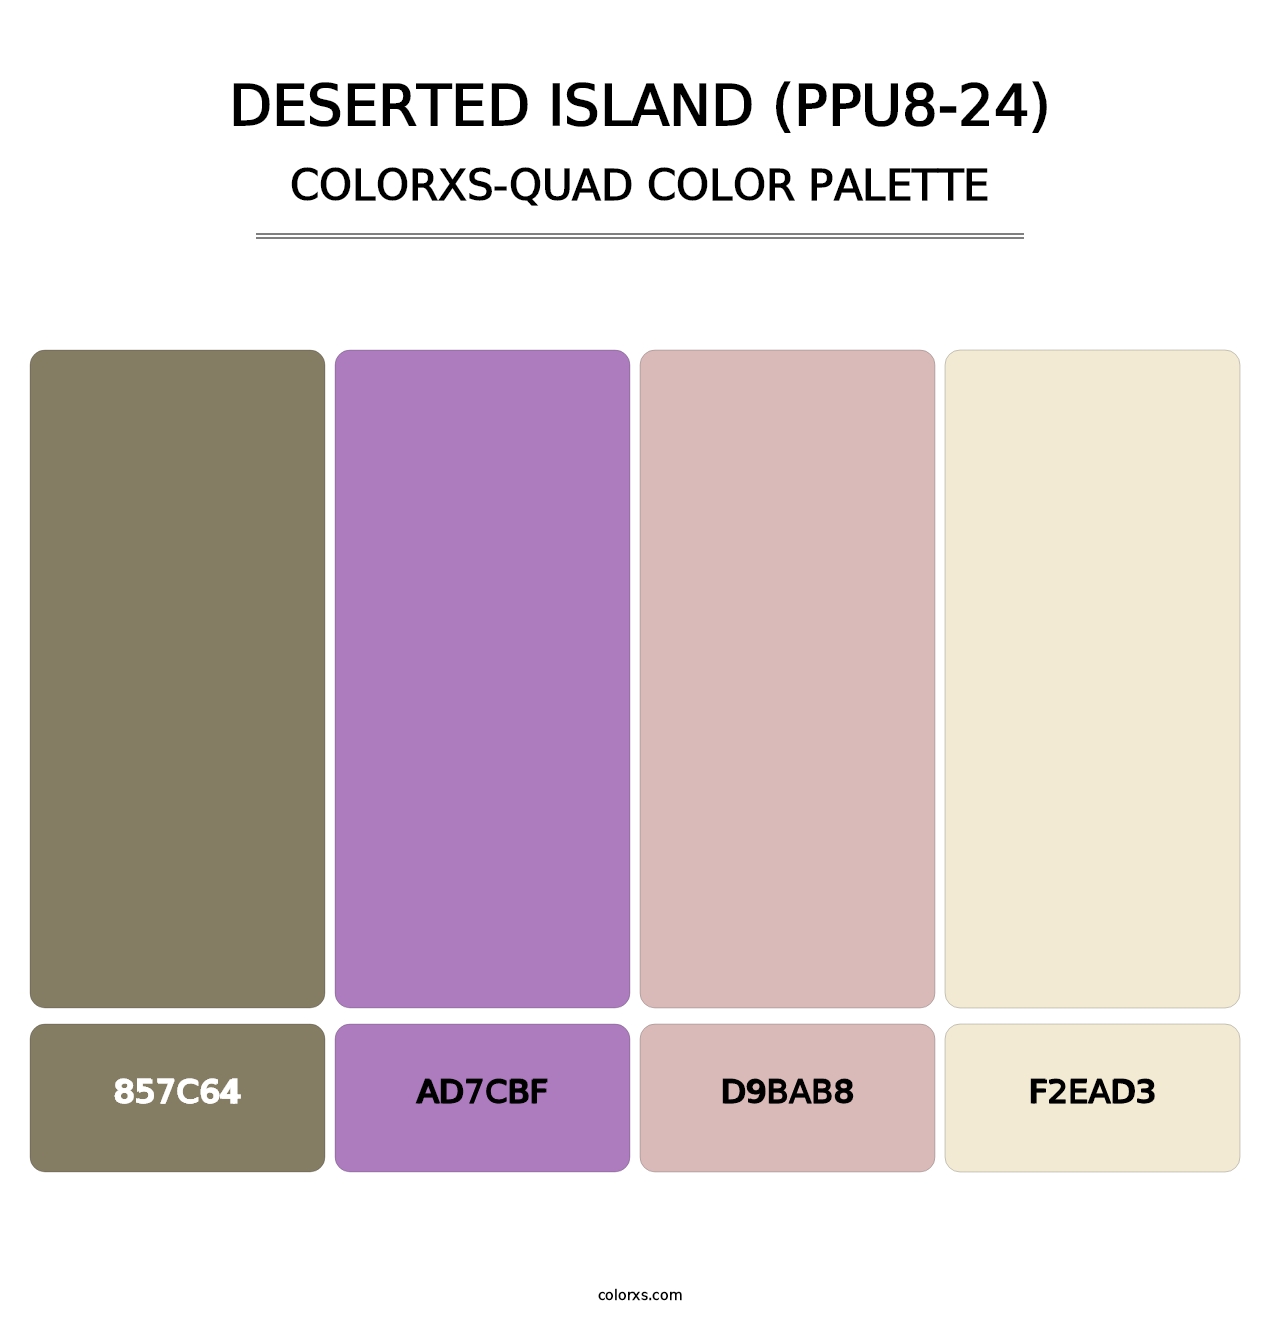 Deserted Island (PPU8-24) - Colorxs Quad Palette